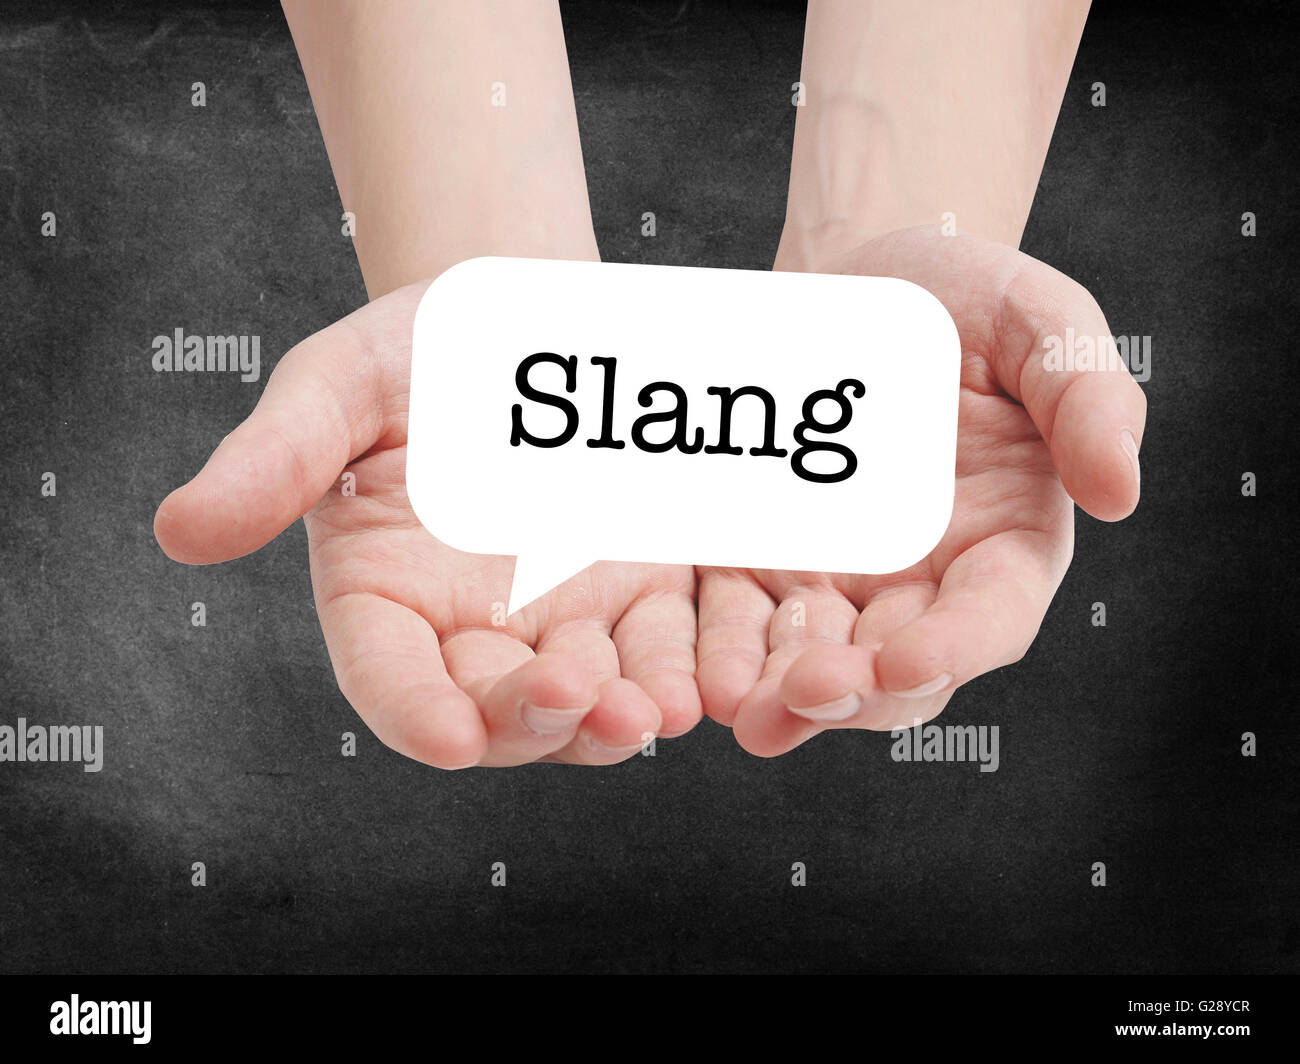 Slang written on a speechbubble Stock Photo